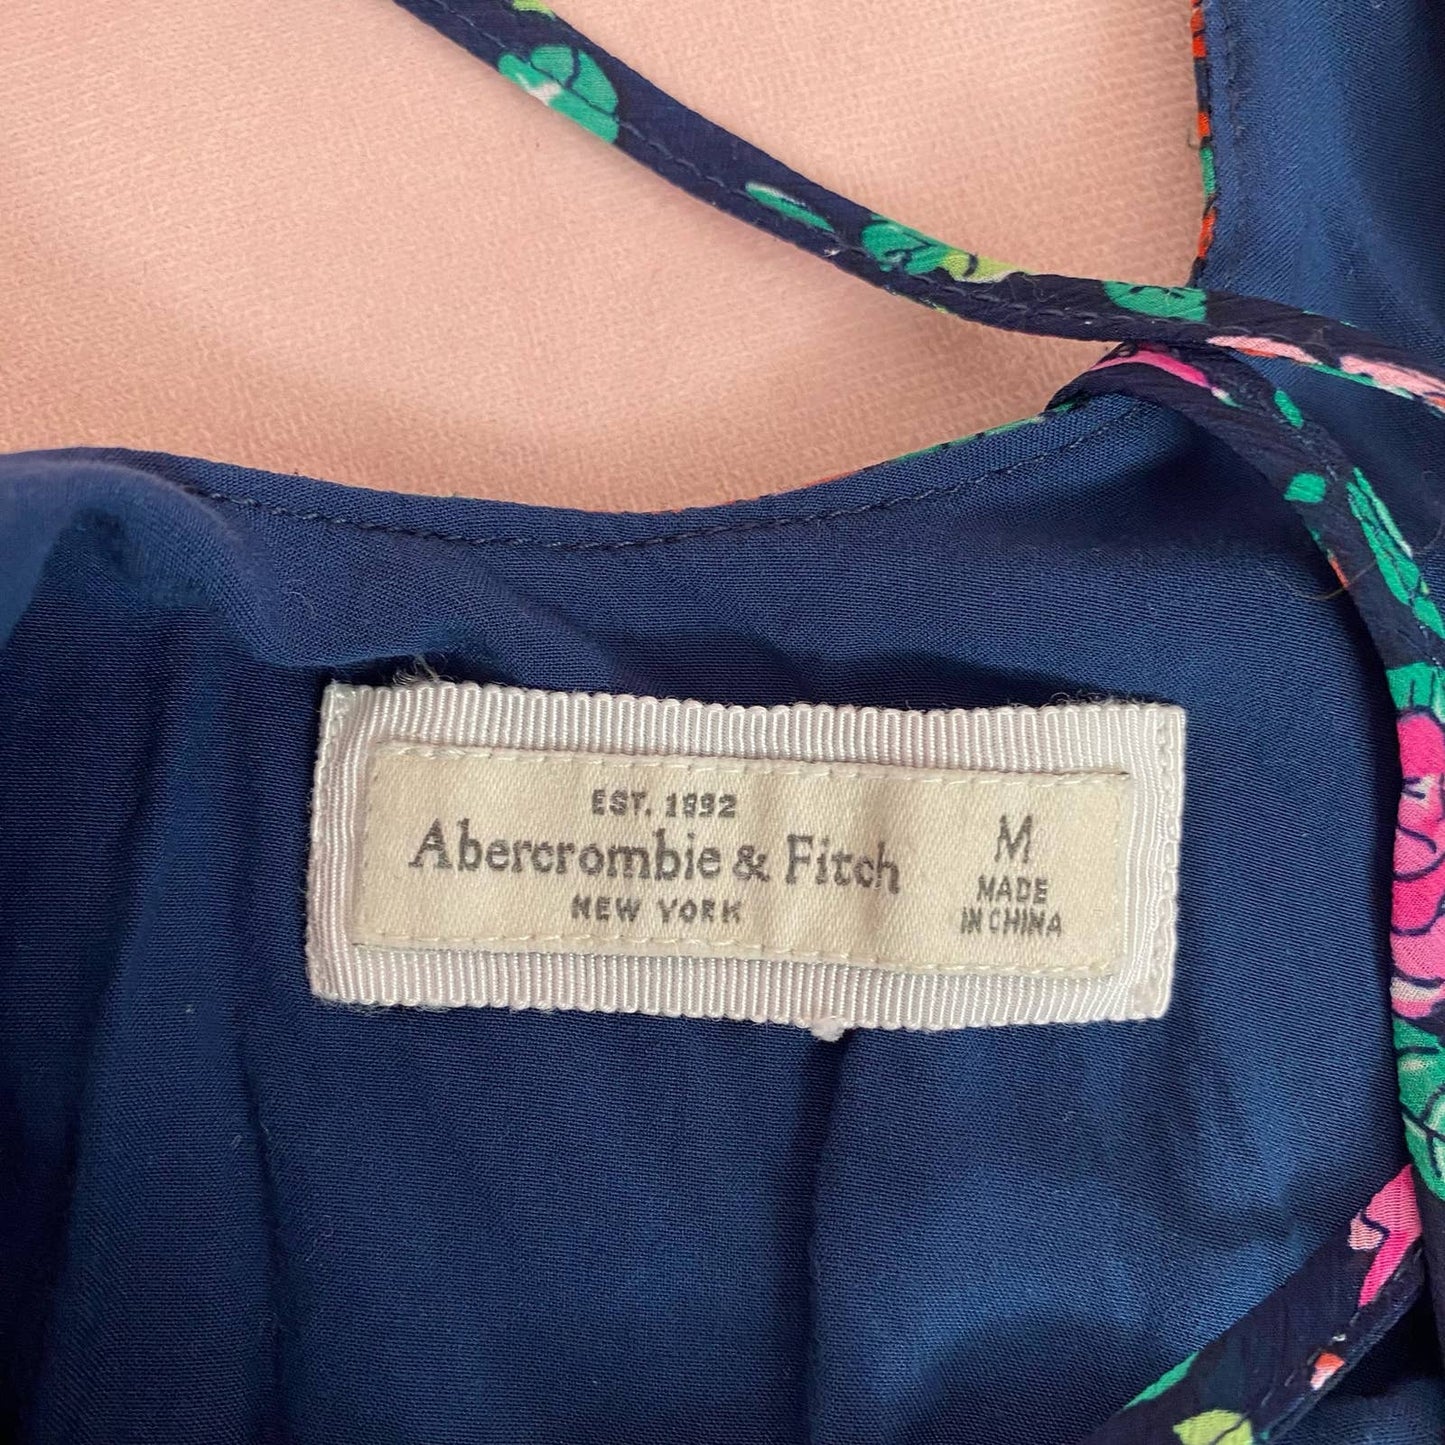 Secondhand Abercrombie & Fitch Floral Lace Mini Dress, Size Medium